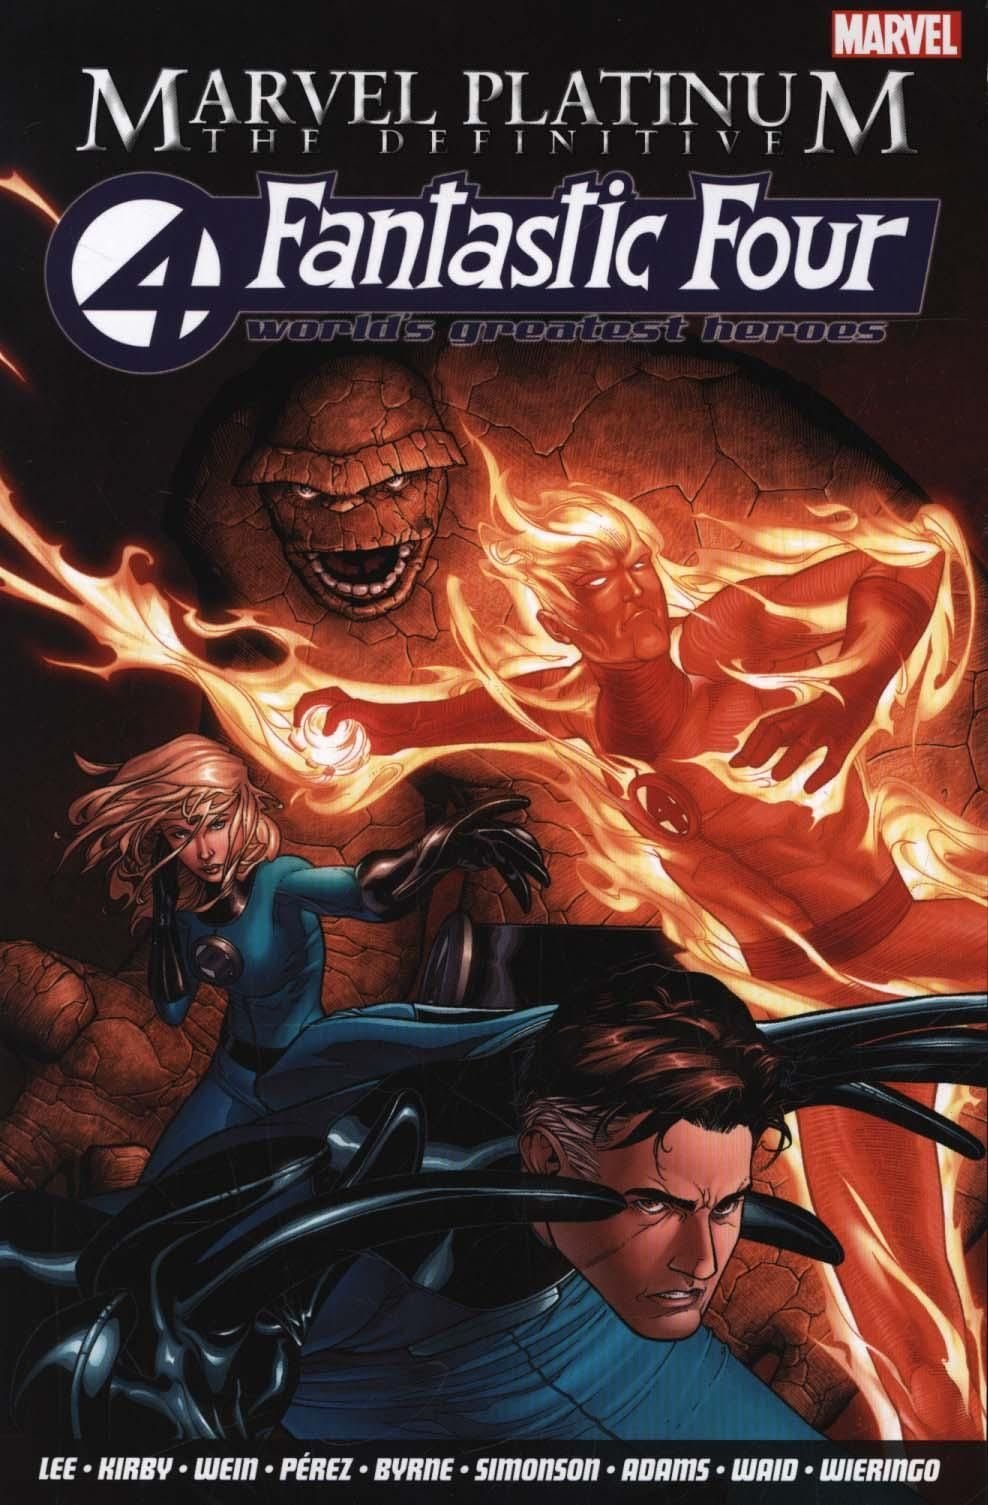 Marvel Platinum: The Definitive Fantastic Four